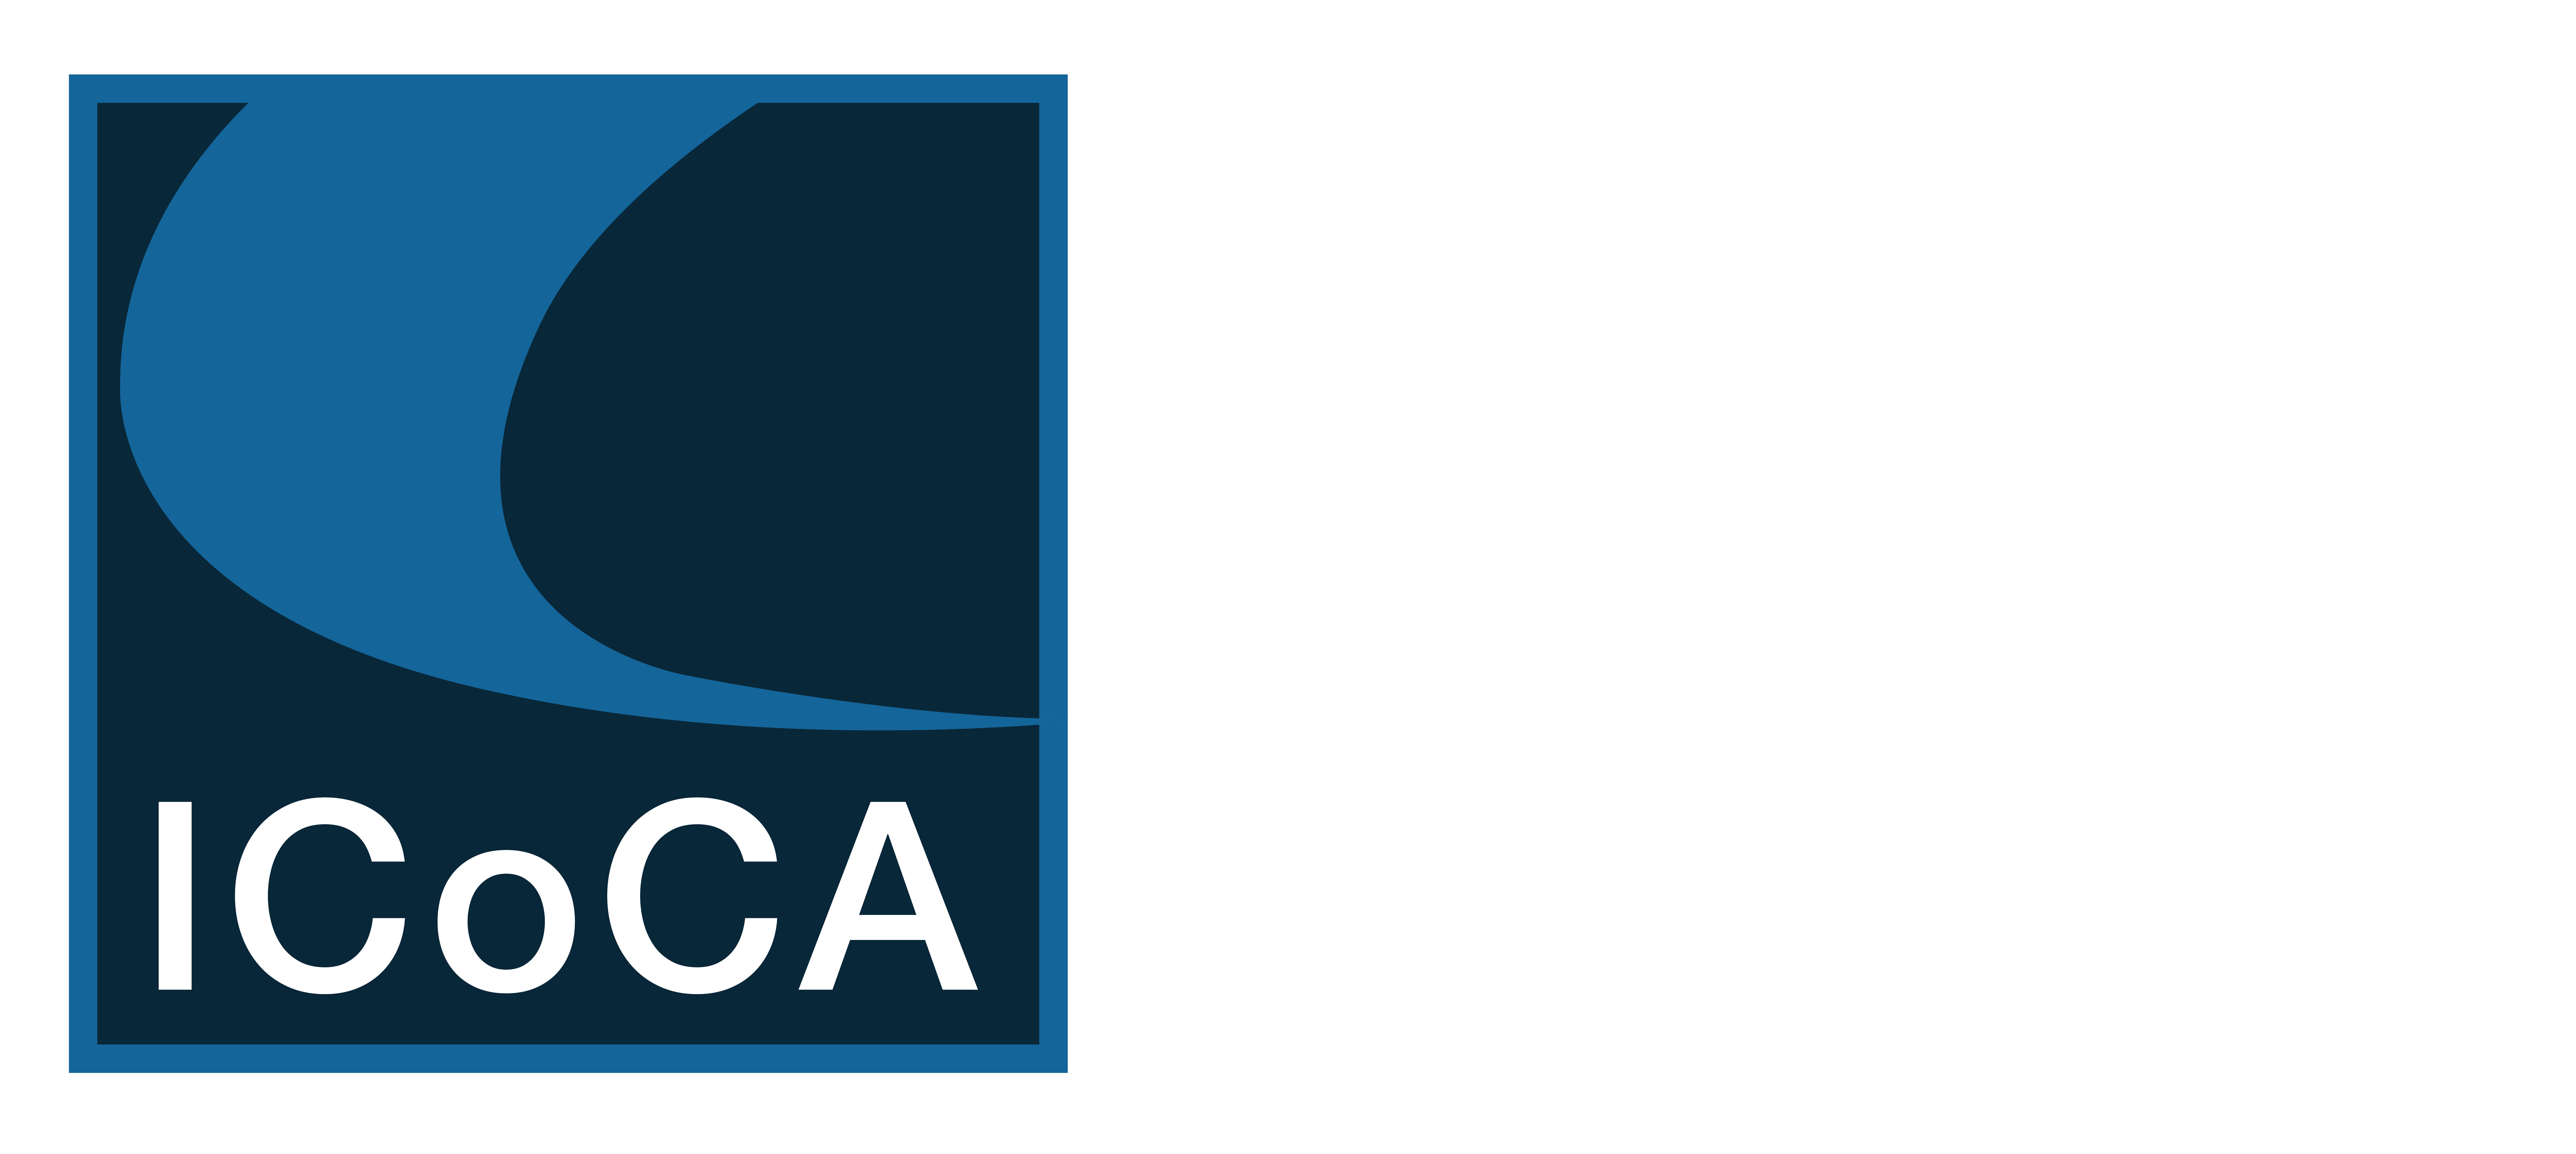 ICoCA – International Code of Conduct Association